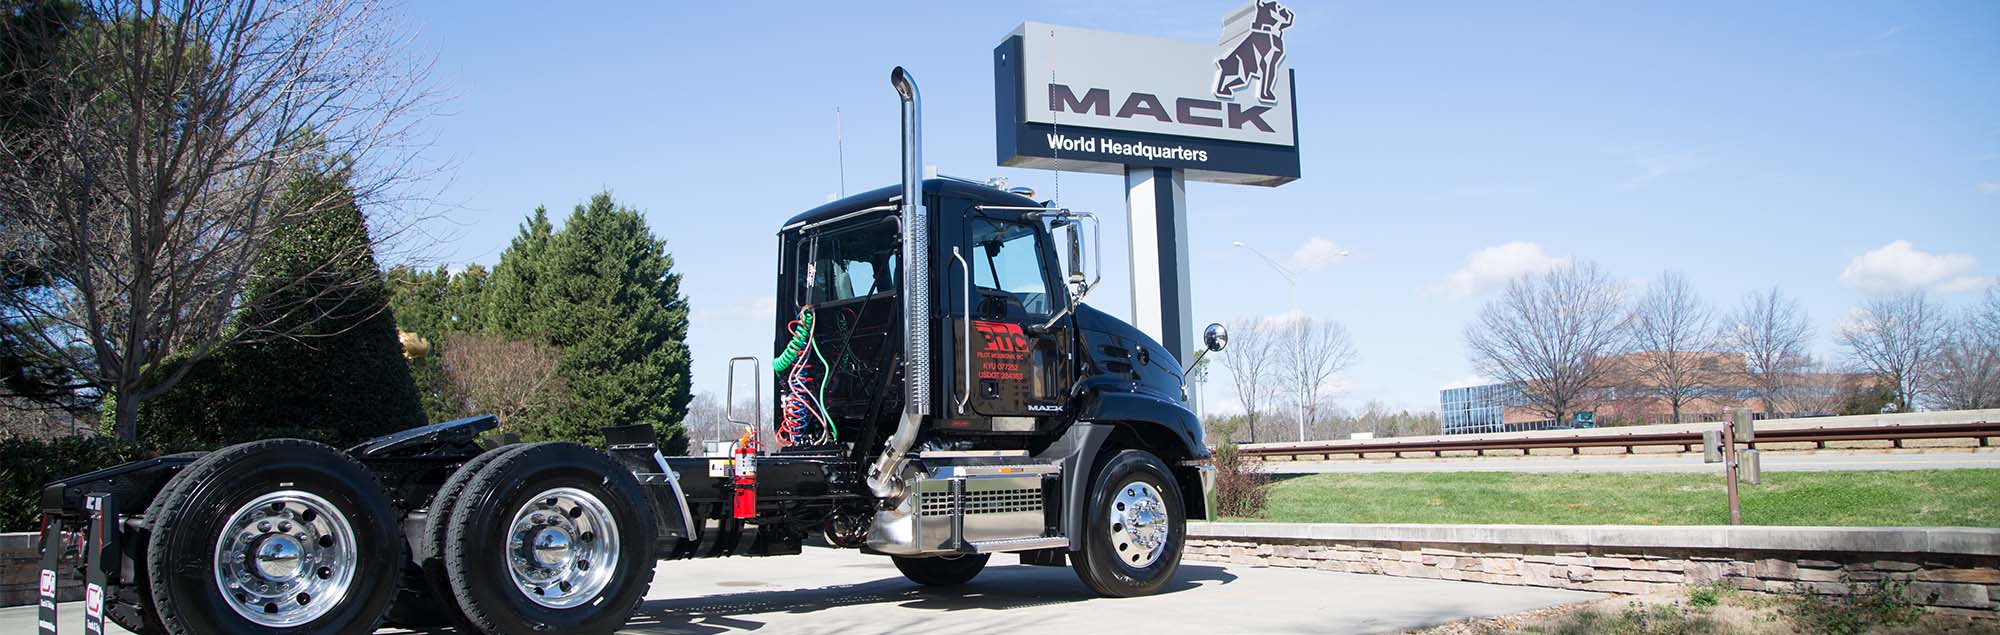 Black Transport Truck and MACK Sign